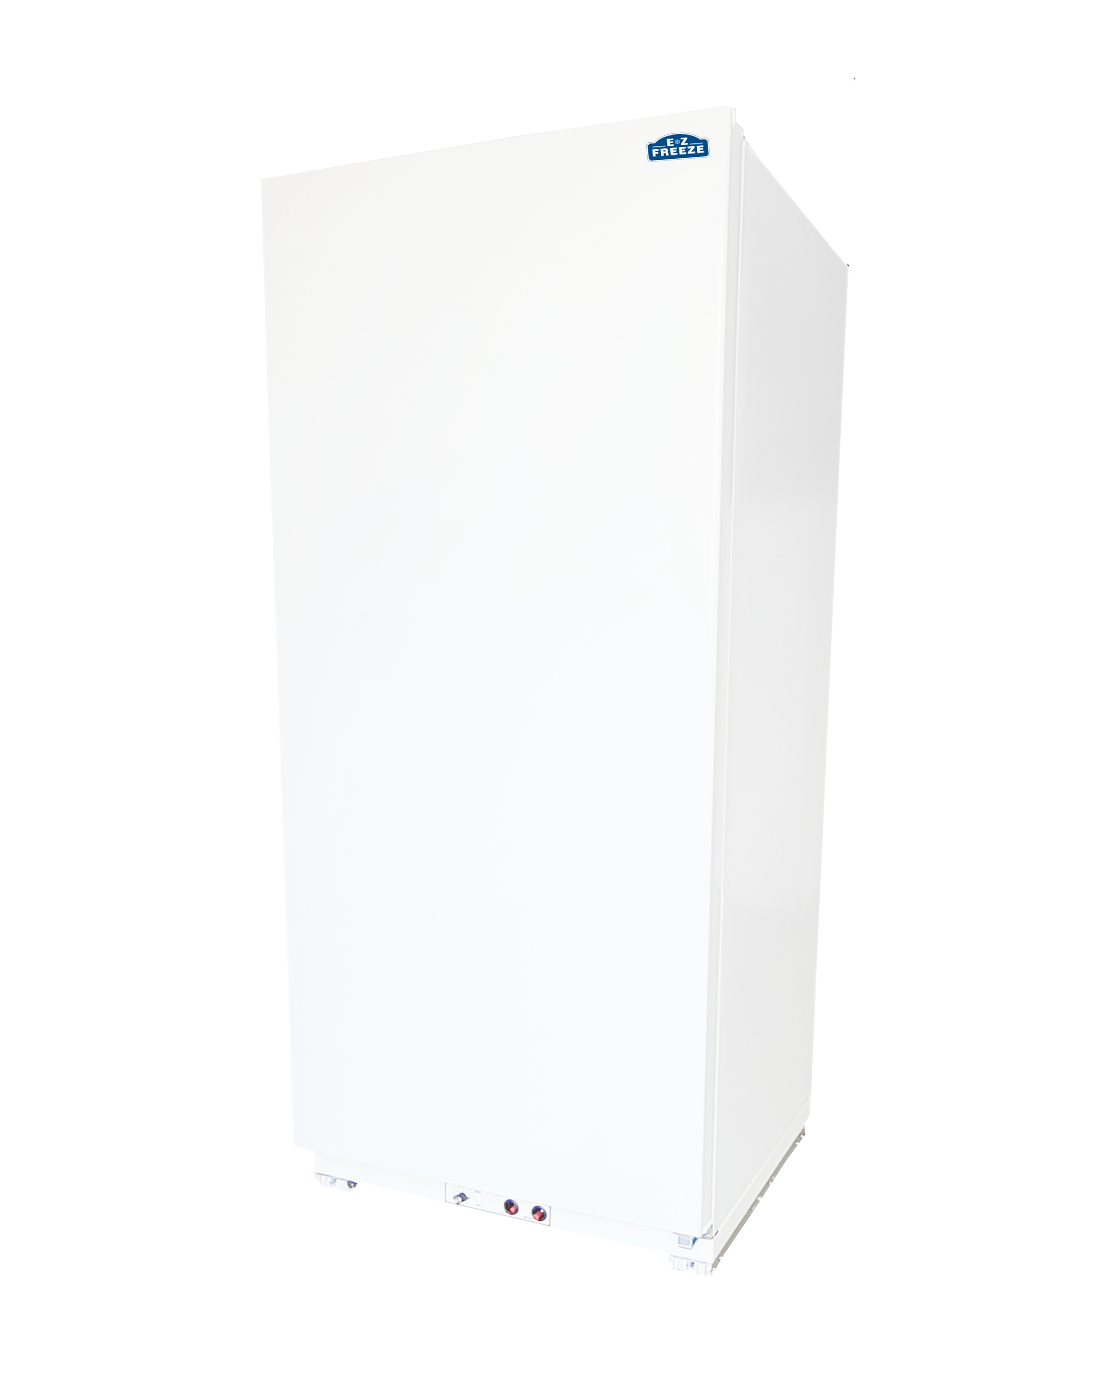 EZ Freeze Propane Refrigerator EZ Freeze EZ-21R 21 cu. ft. Propane All-Refrigerator (No Freezer Section) in White - Call for Availability